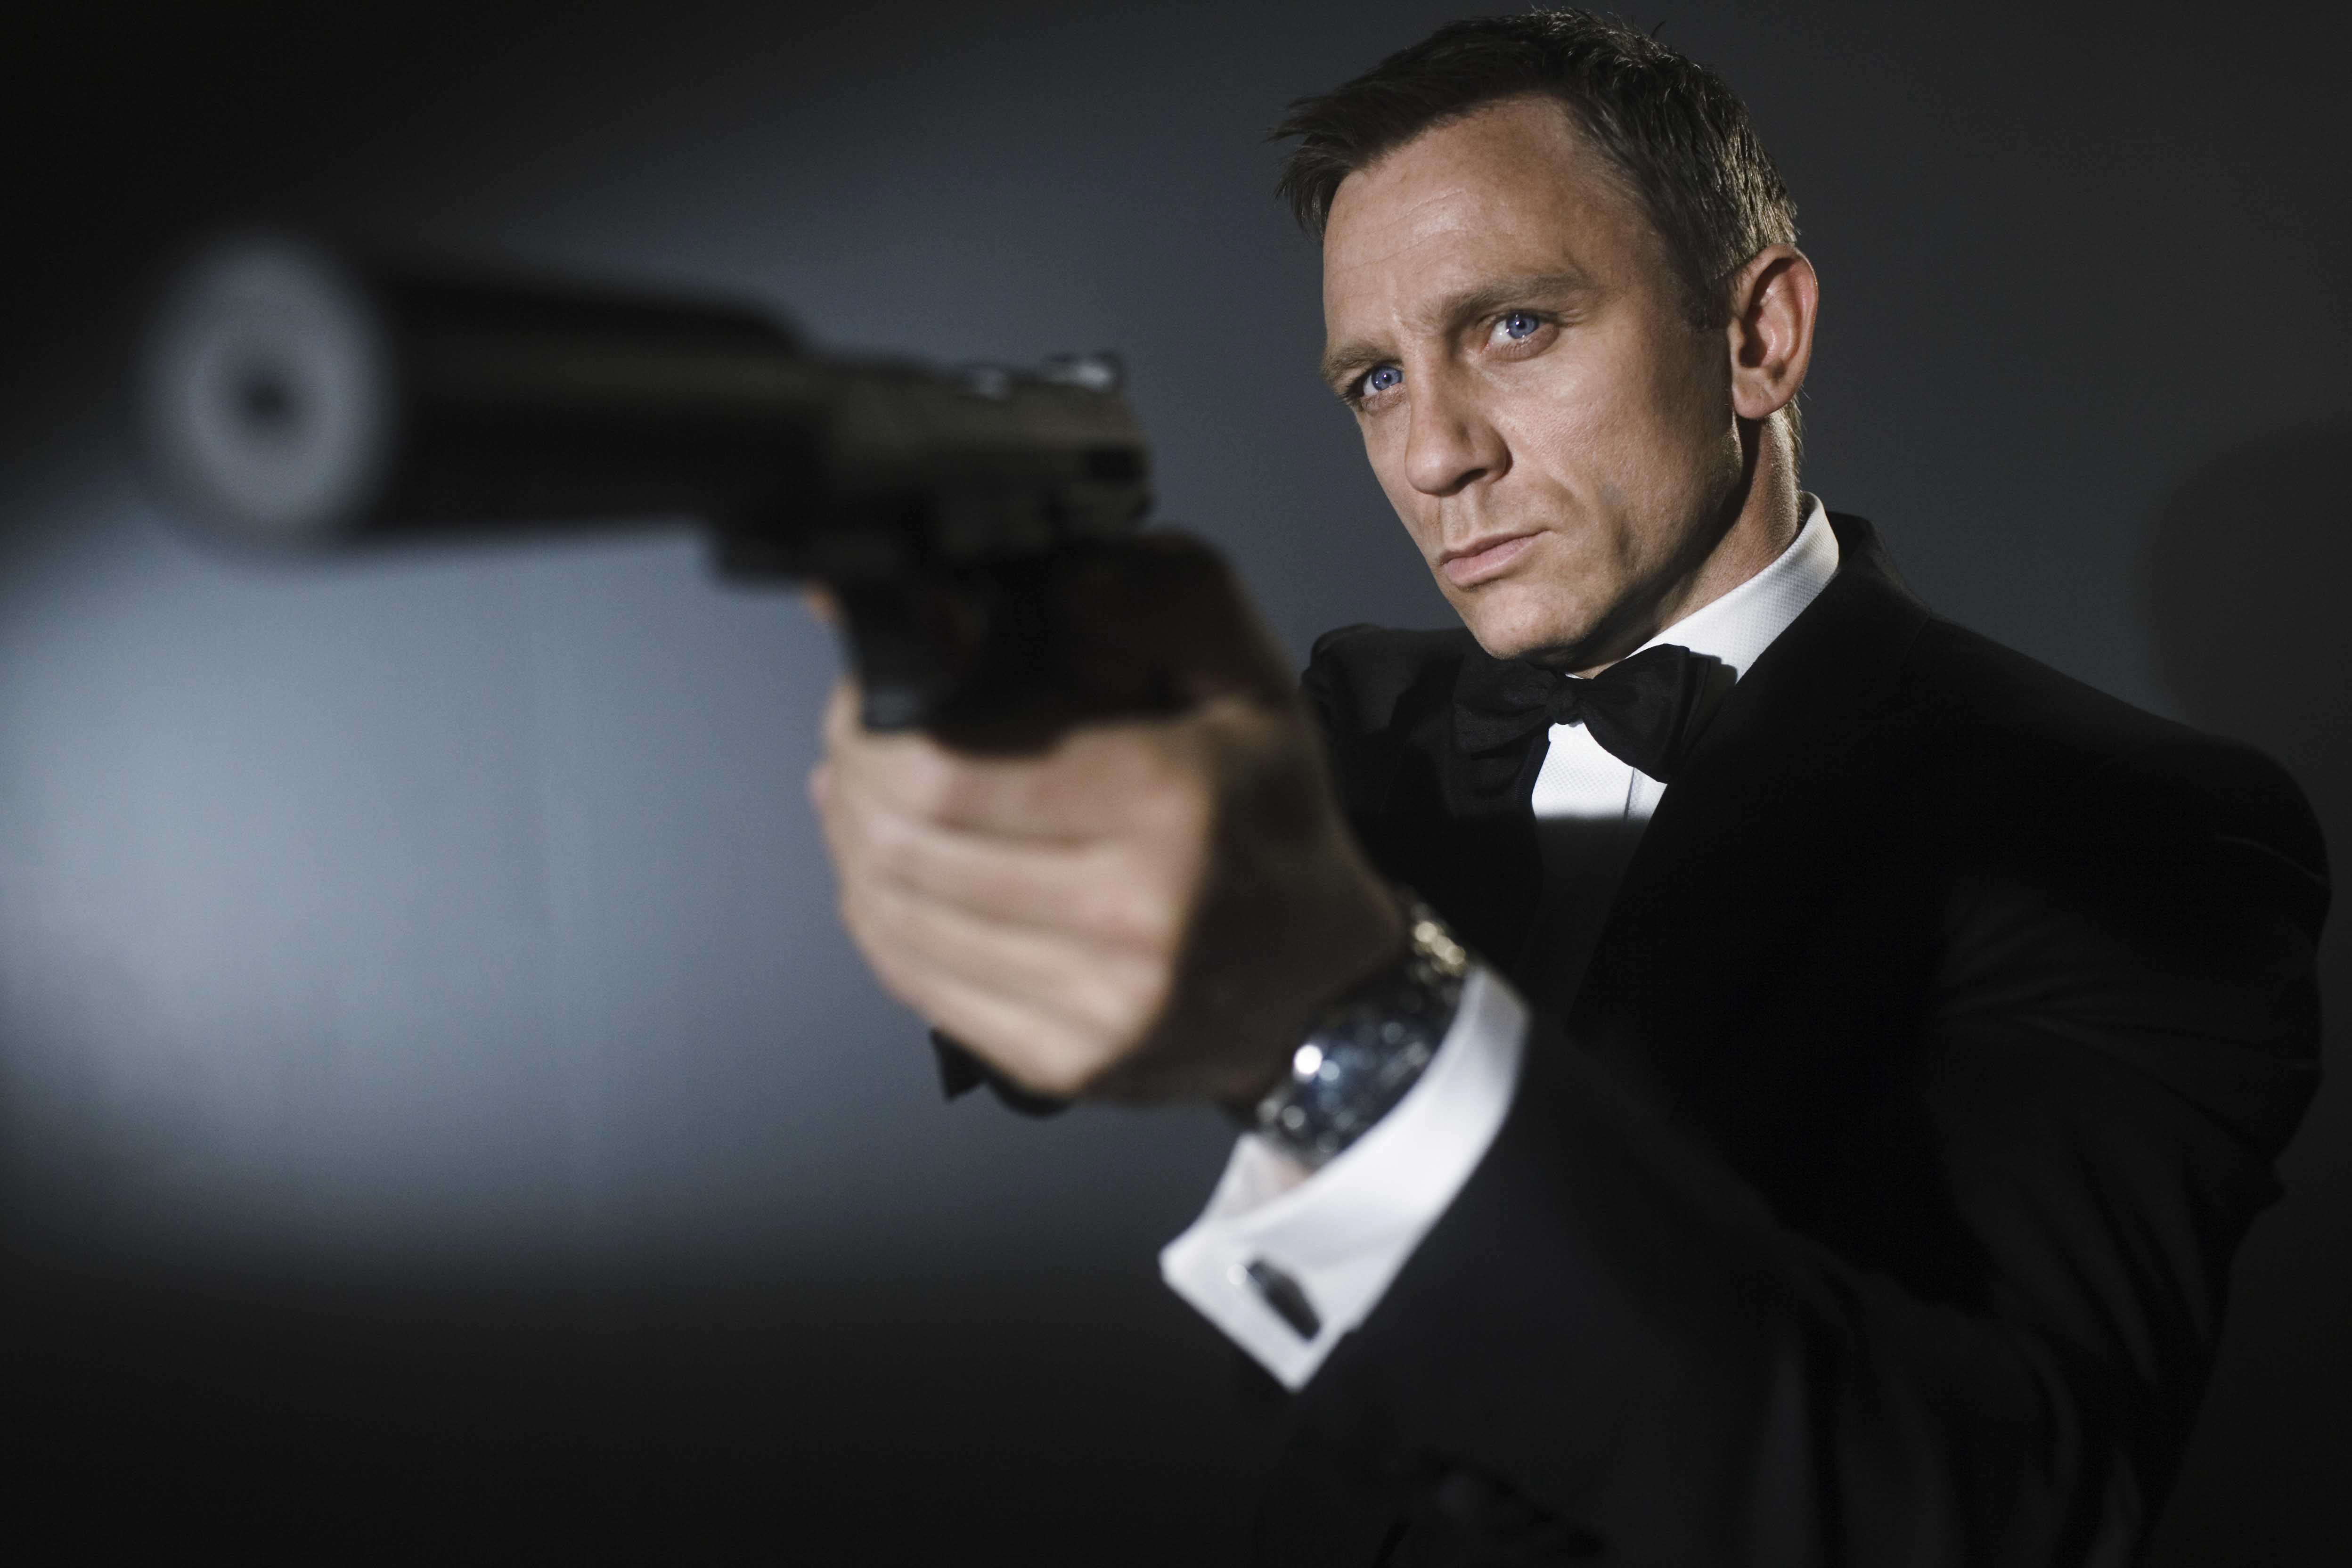 People 4992x3328 Daniel Craig men actor movies supressor Walther P99 gun James Bond weapon